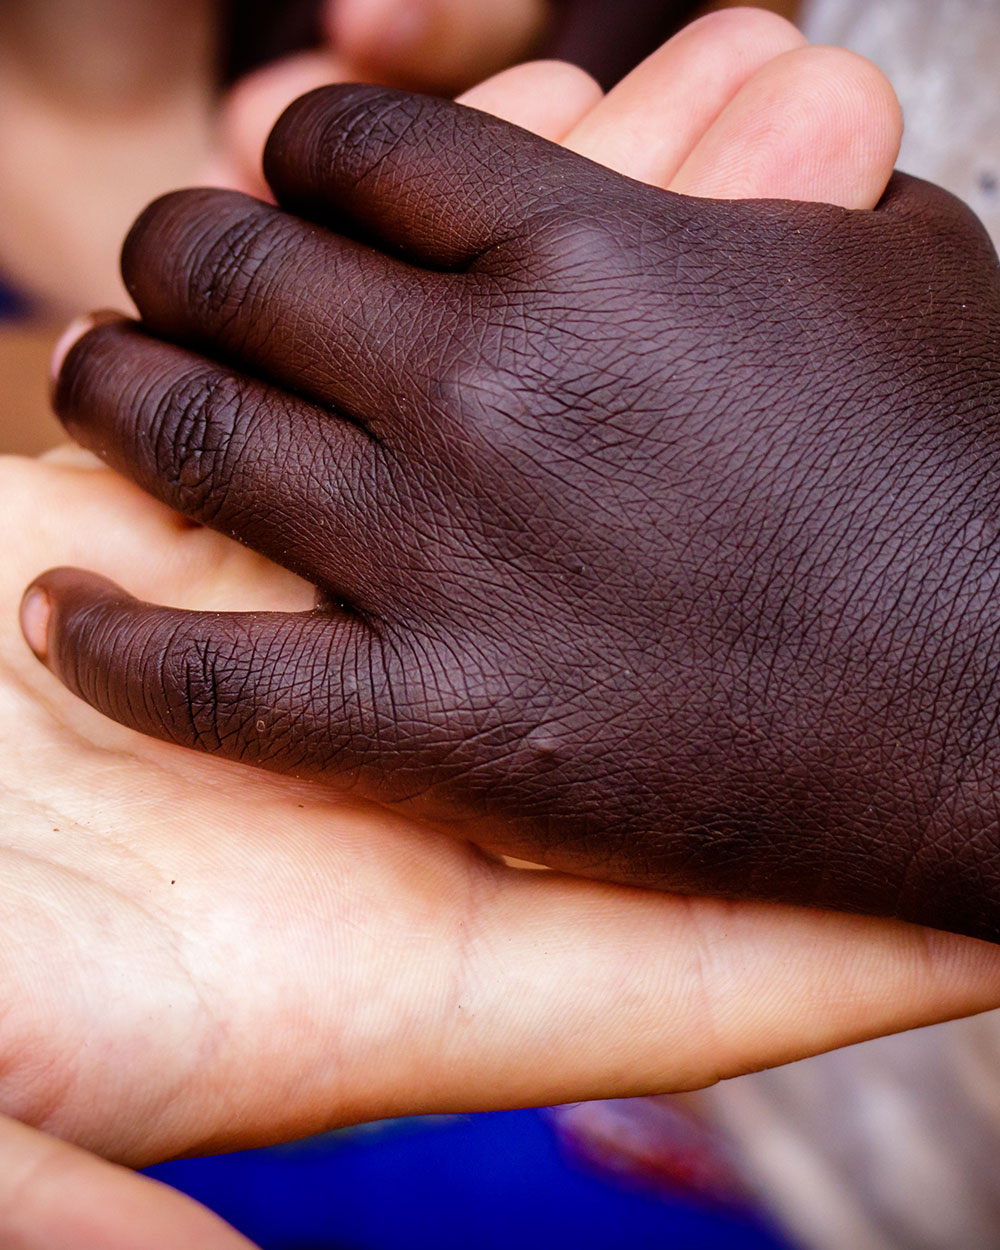 White adult hand holding black children's hand